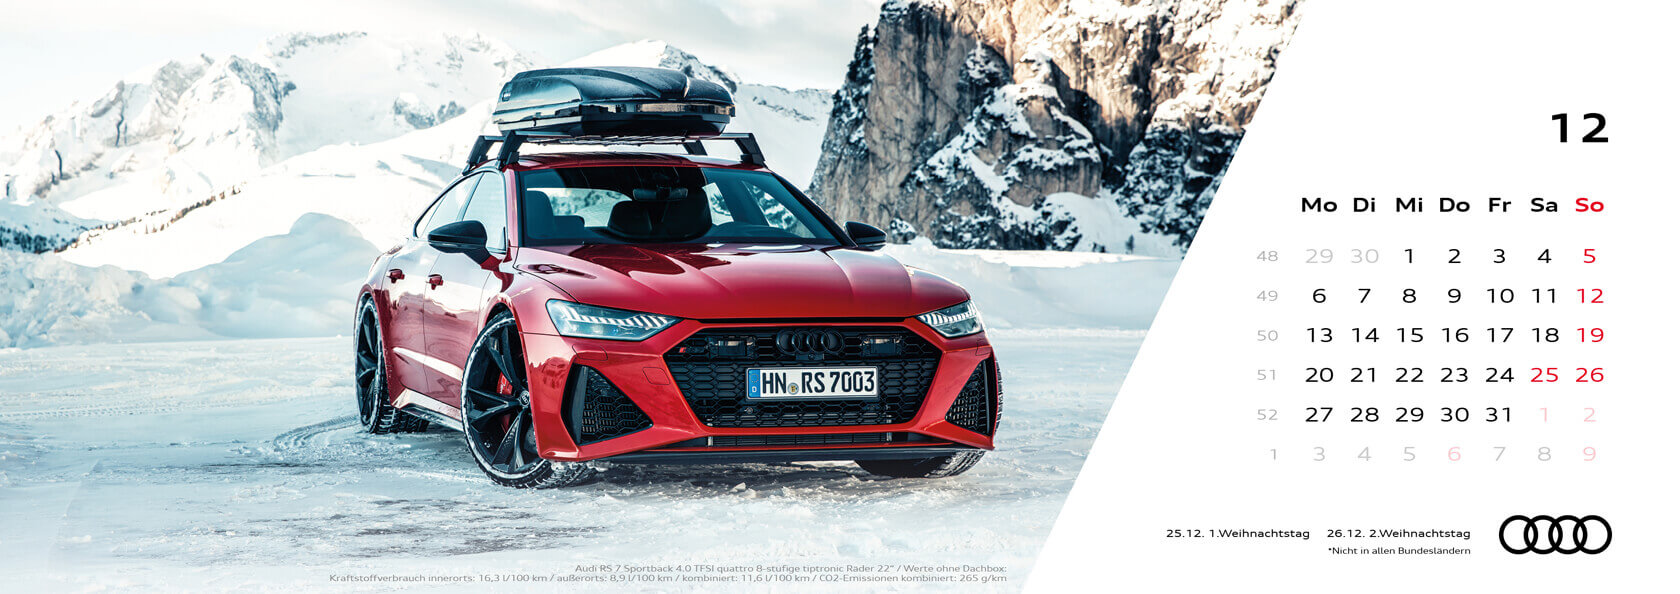 Audi Tischkalender 2021 | Officially licensed by AUDI AG